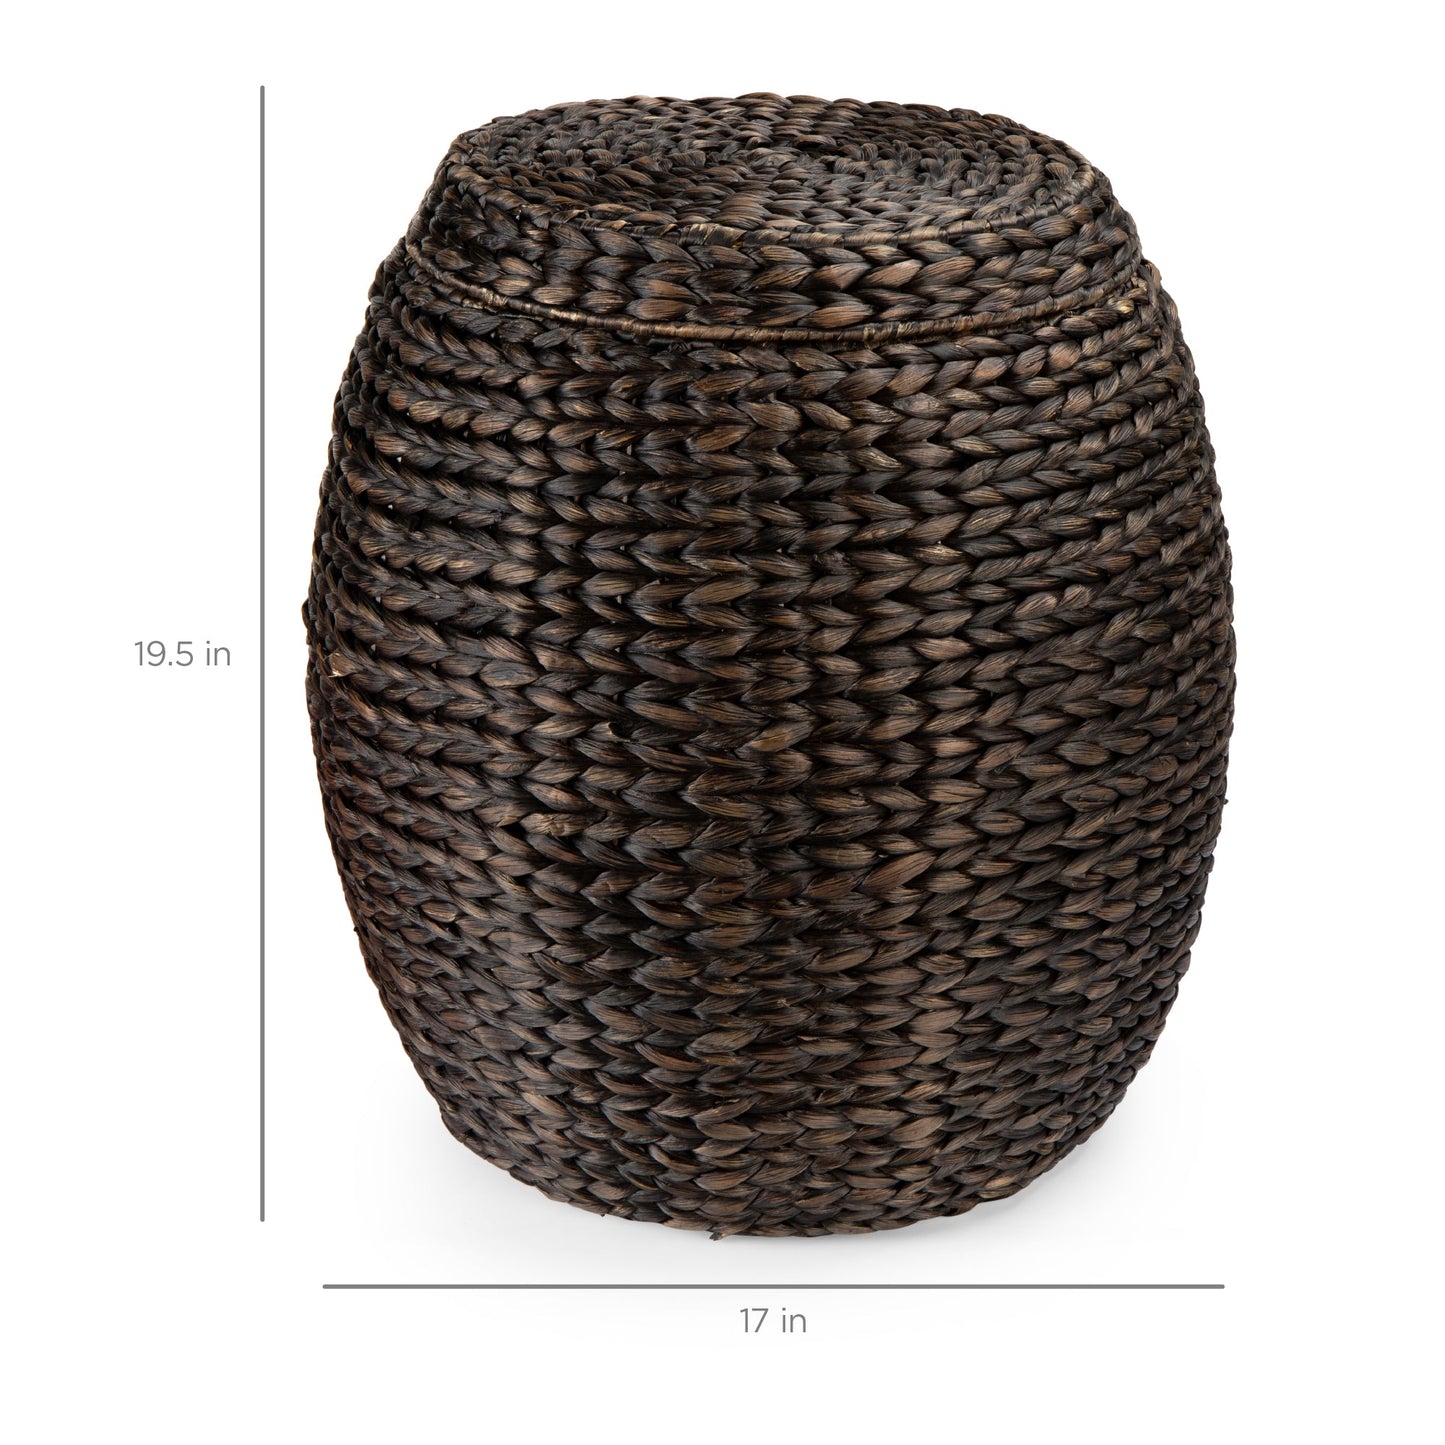 Vintage Hyacinth Storage Tote Basket, Organizer w/ Lid